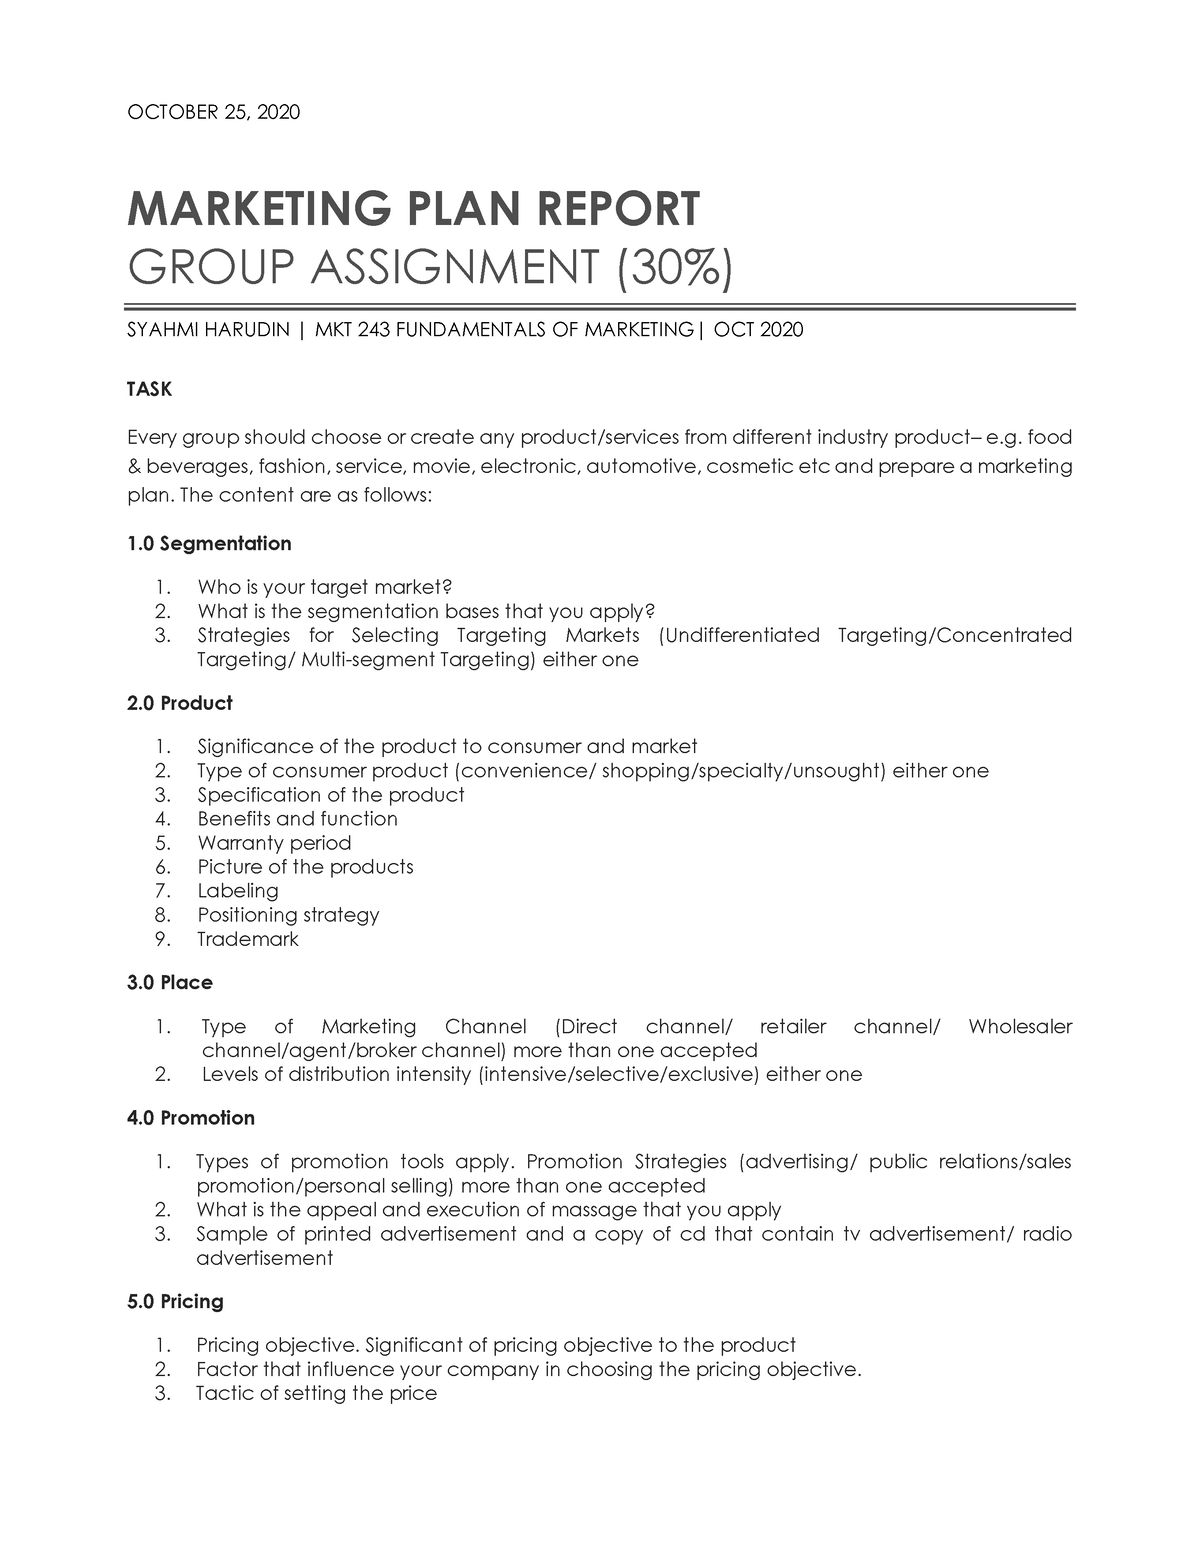 Marketing plan REPORT - OCTOBER 25, 2020 MARKETING PLAN REPORT GROUP ...